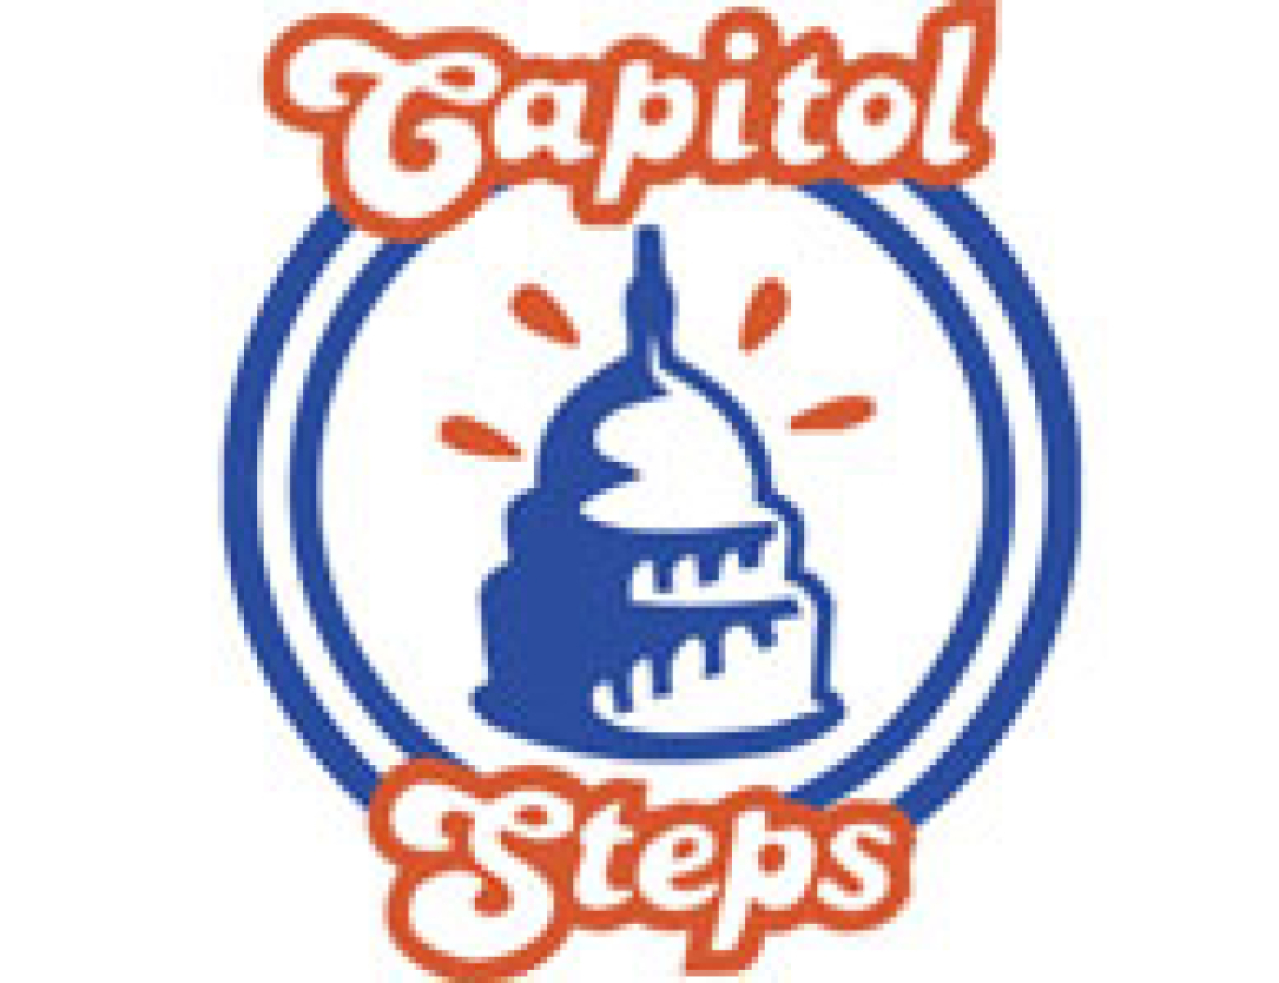 capitol steps logo 52449 1